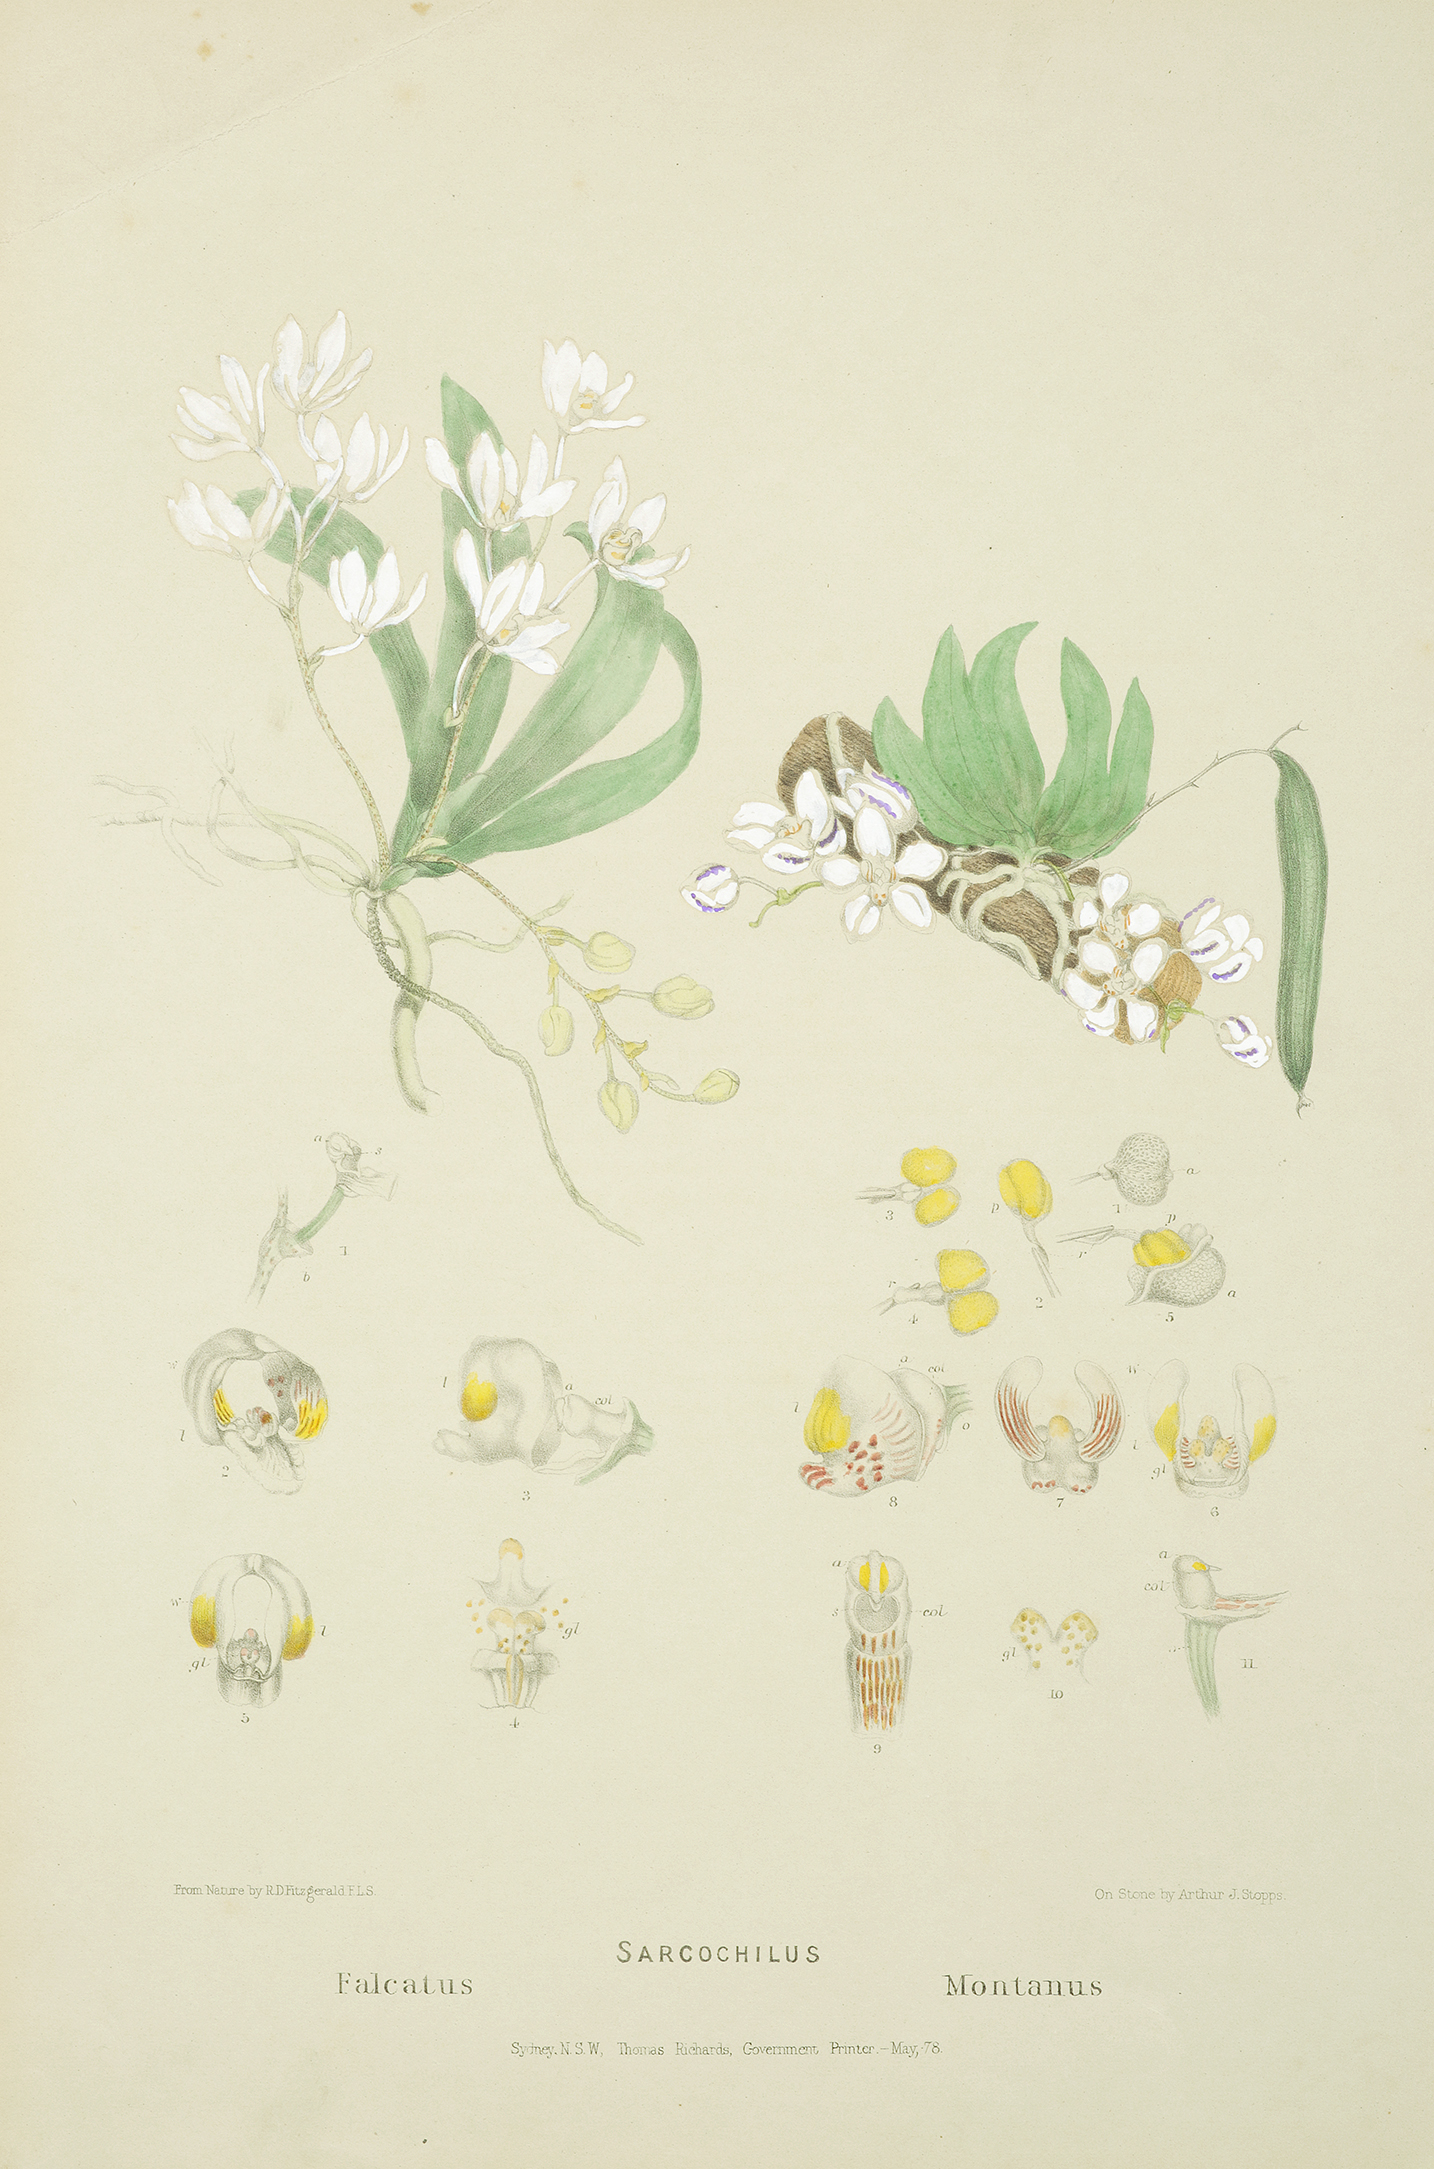 Sarcochilus Falcatus [Orange Blossom Orchid] Sarcochilus Montanus [Now Sarcochilus falcatus] - Antique Print from 1879